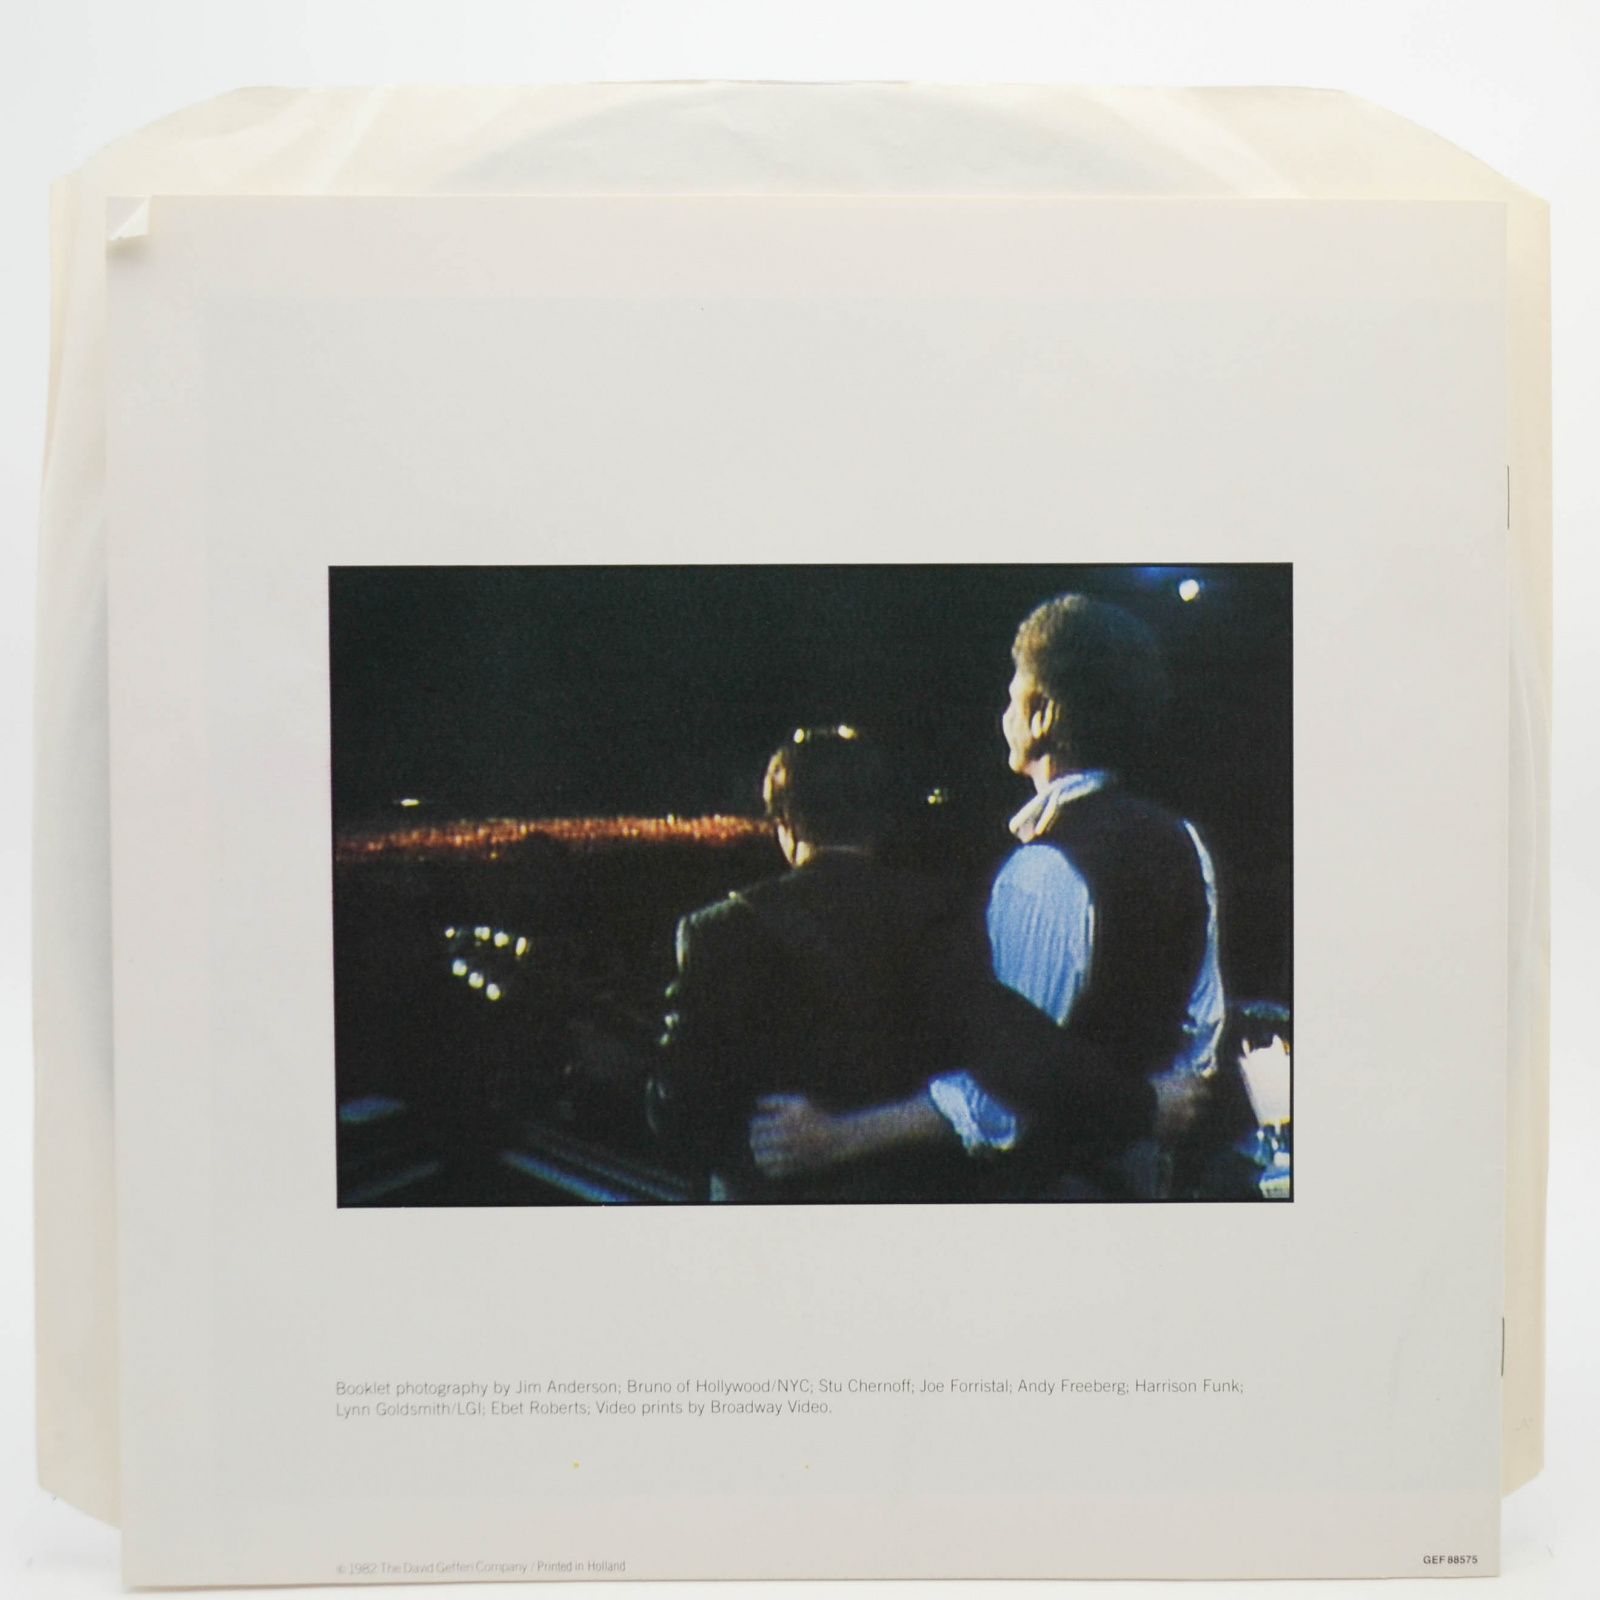 Simon & Garfunkel — The Concert In Central Park (2LP, booklet), 1982